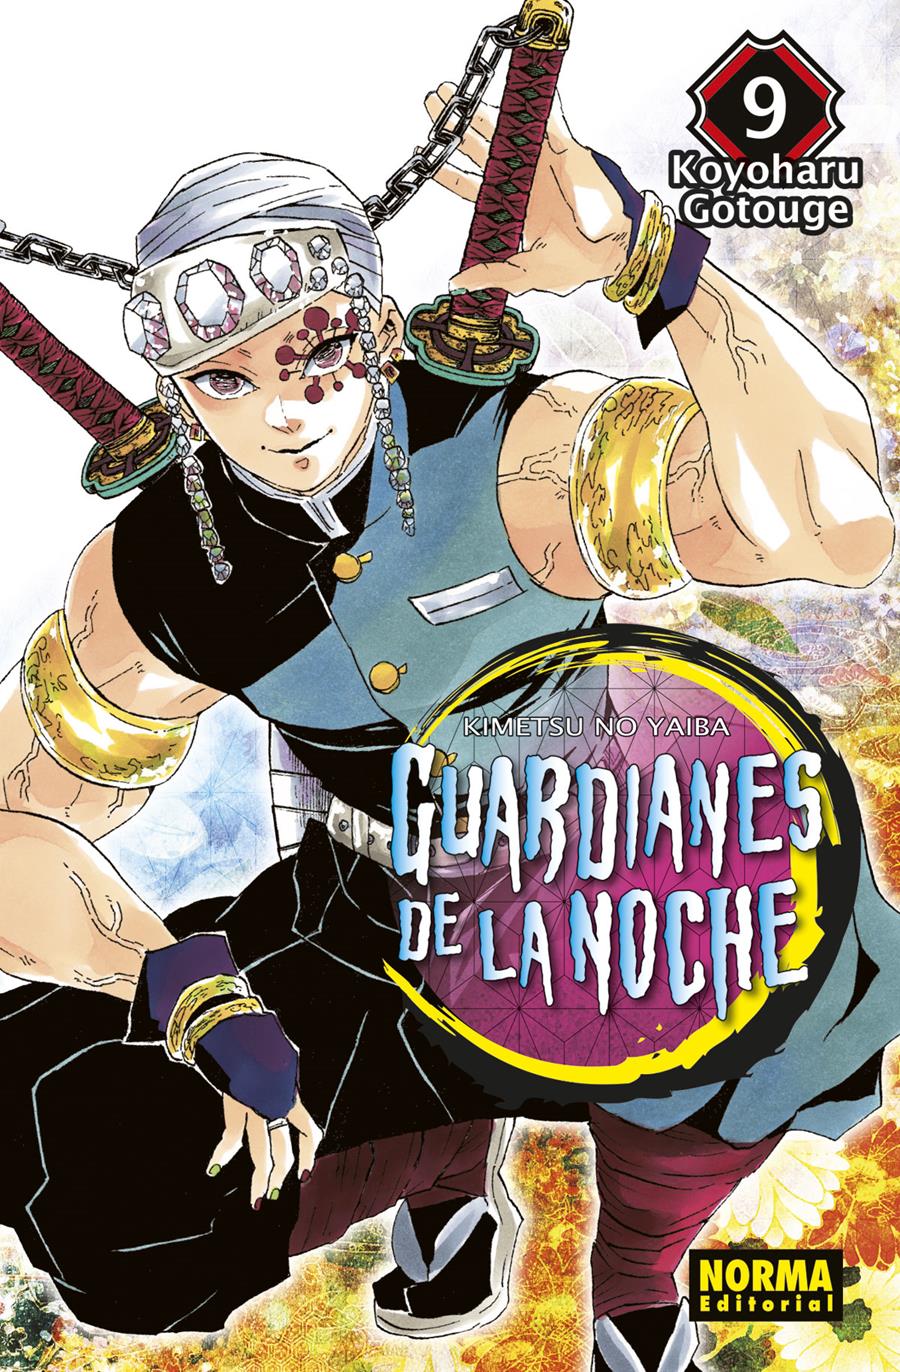 Guardianes de la noche 09 | N0320-NOR28 | Koyoharu Gotouge | Terra de Còmic - Tu tienda de cómics online especializada en cómics, manga y merchandising